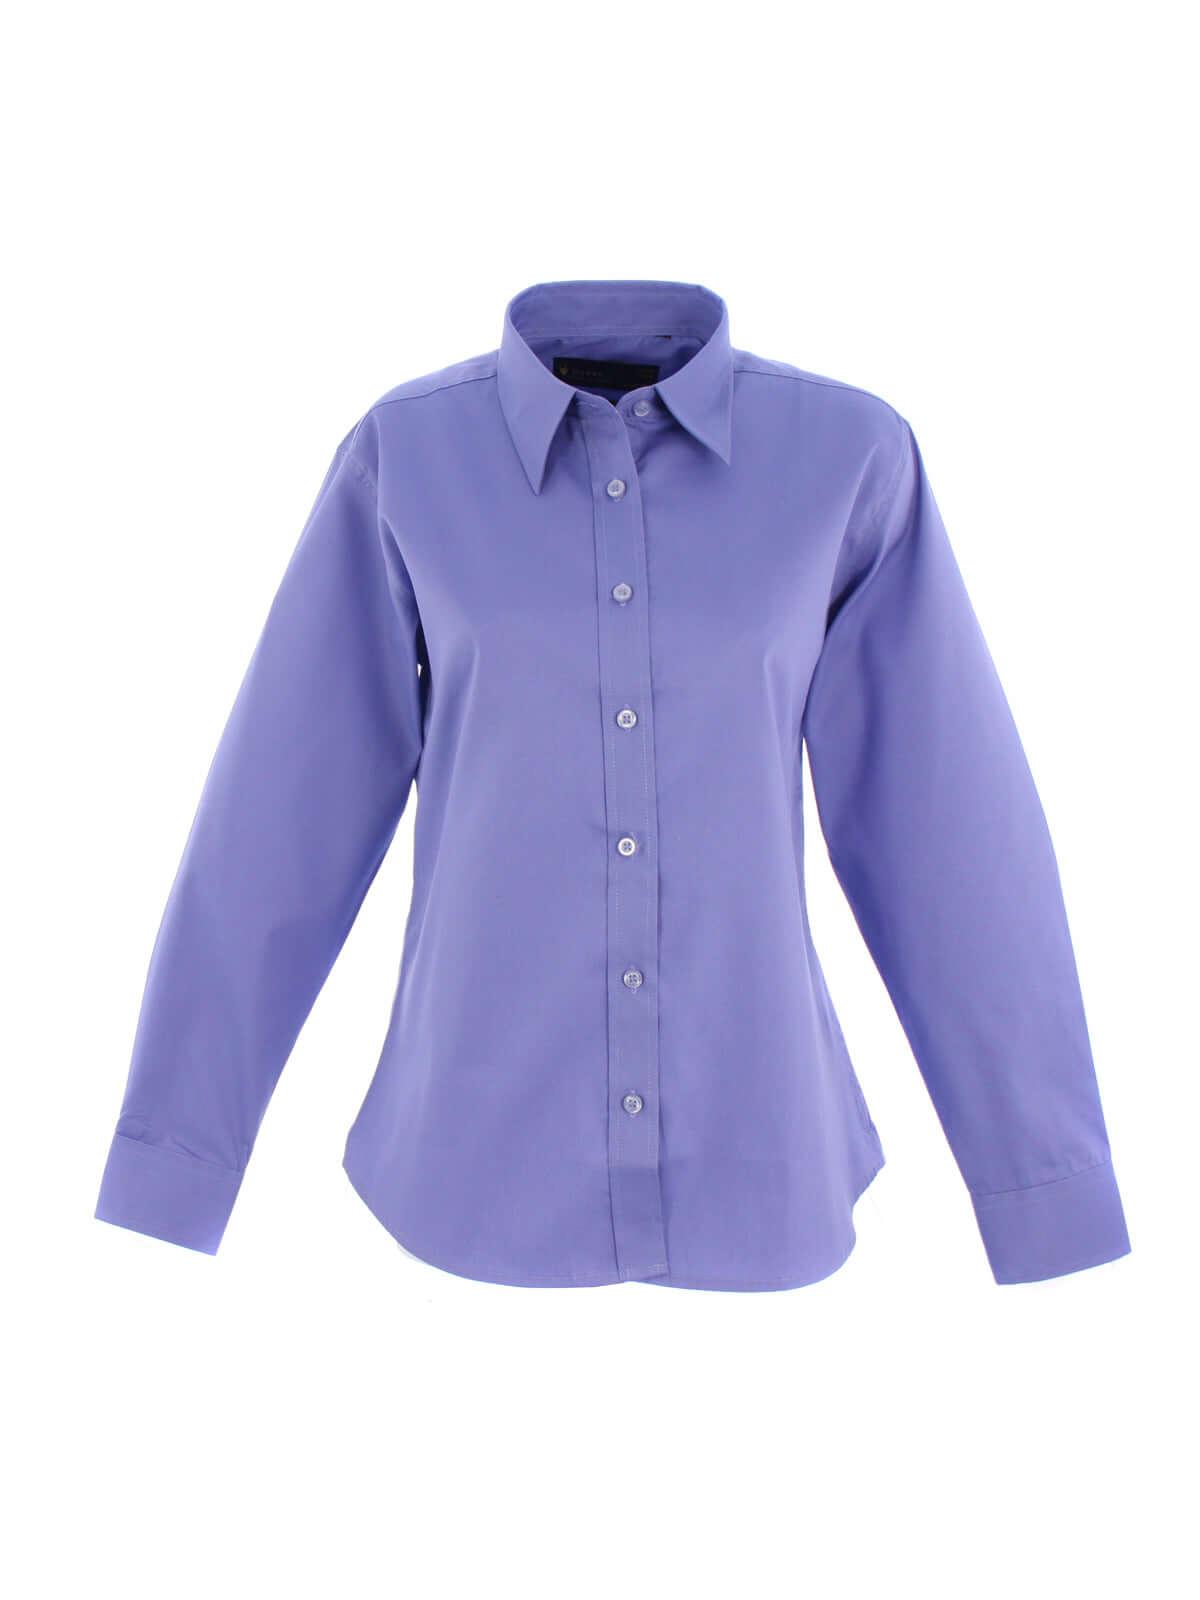 Pegasus Uniform Ladies Pinpoint Oxford Long Sleeve Shirt - Royal Blue